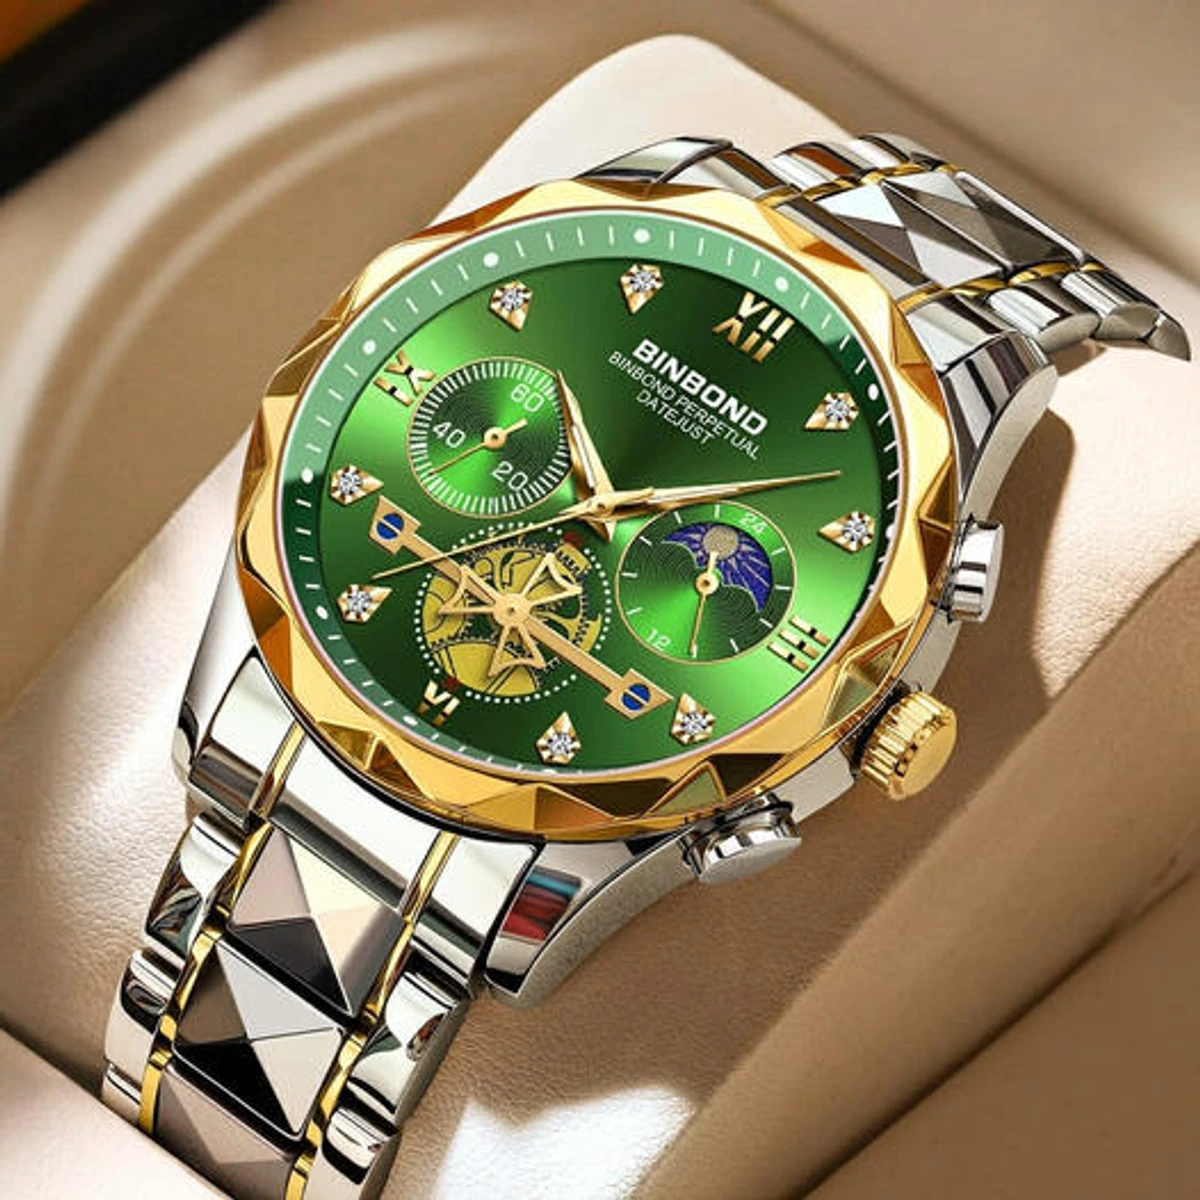 New Luxury Binbond Brand Men's Luminous Watches Stainless Steel Waterproof BINBOND Chronograph TOTON AR DIAL GREEN COOLER WATCH